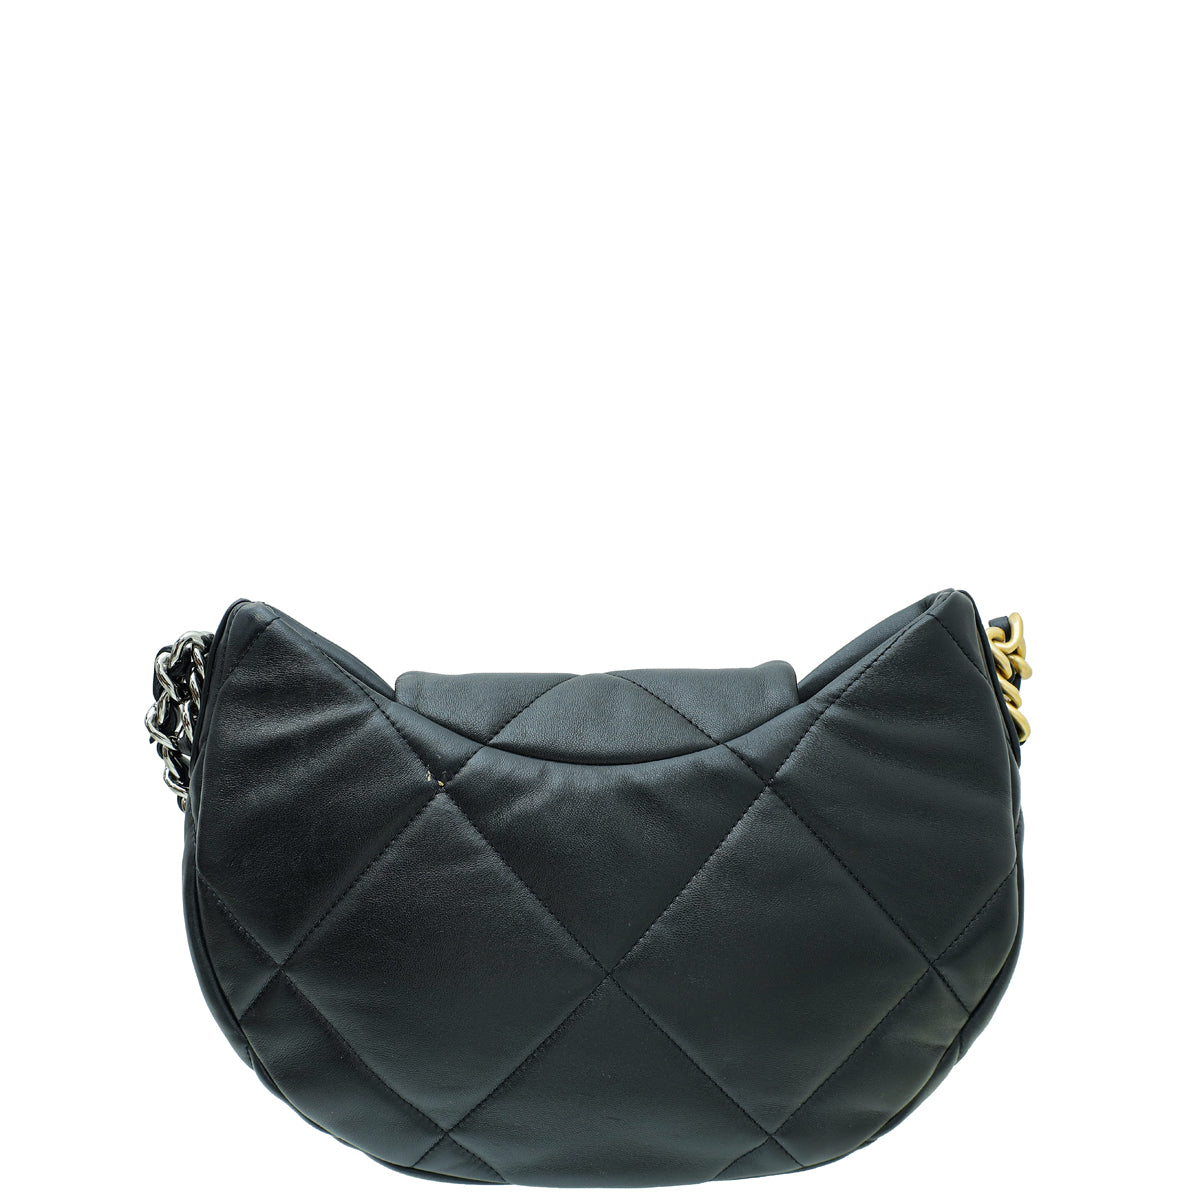 Chanel Black 19 Hobo Bag